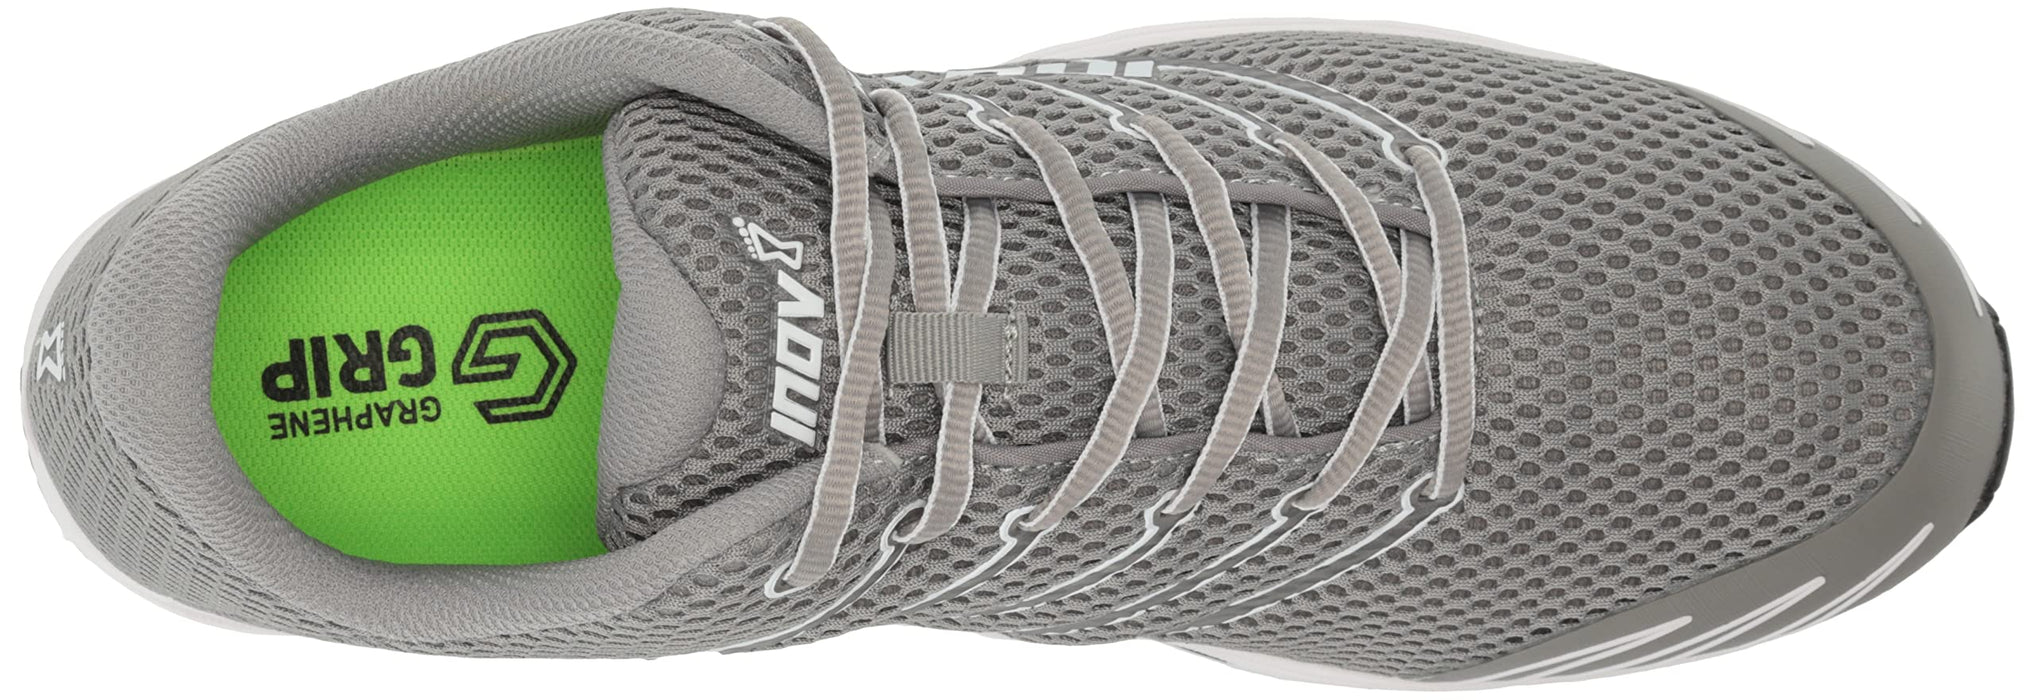 Inov-8 F-Lite G 230 Grey/White Women's Size 5.5 Running Shoes